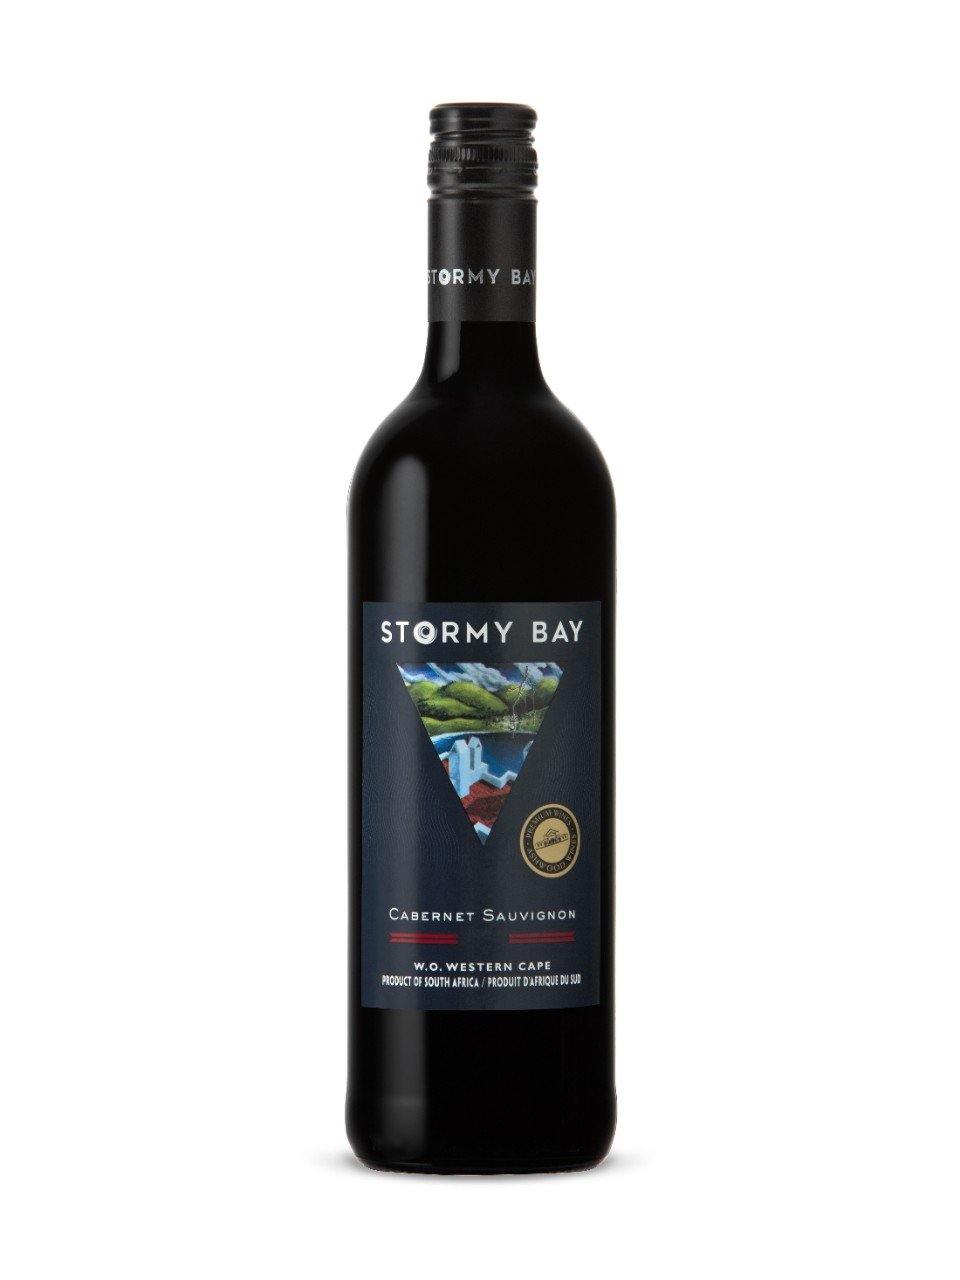 Stormy Bay Cabernet Sauvignon 750 mL bottle - Speedy Booze